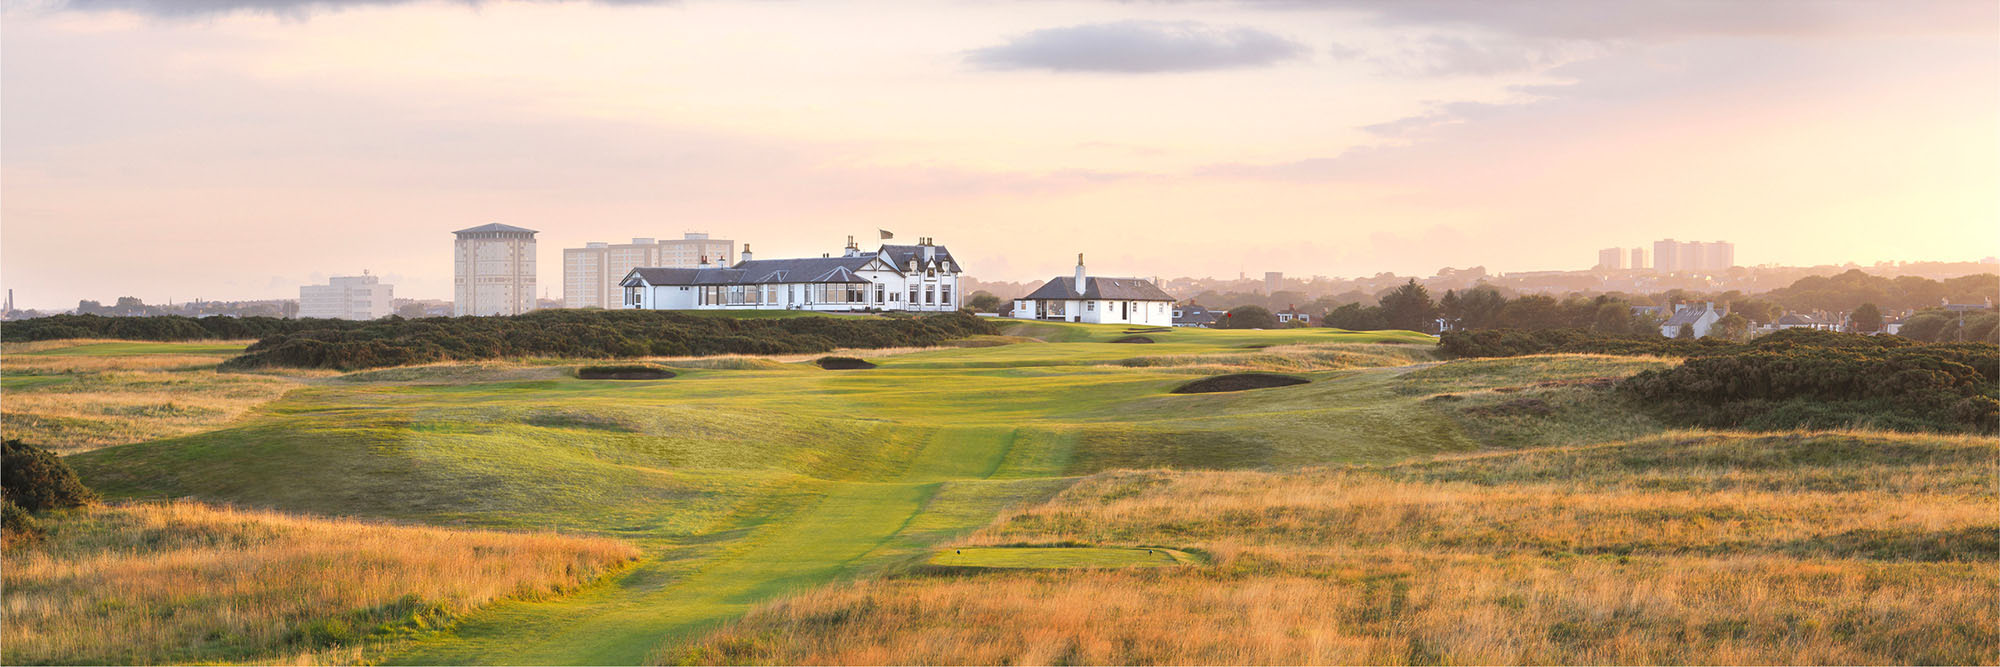 Golf Course Image - Royal Aberdeen Golf Club No.18